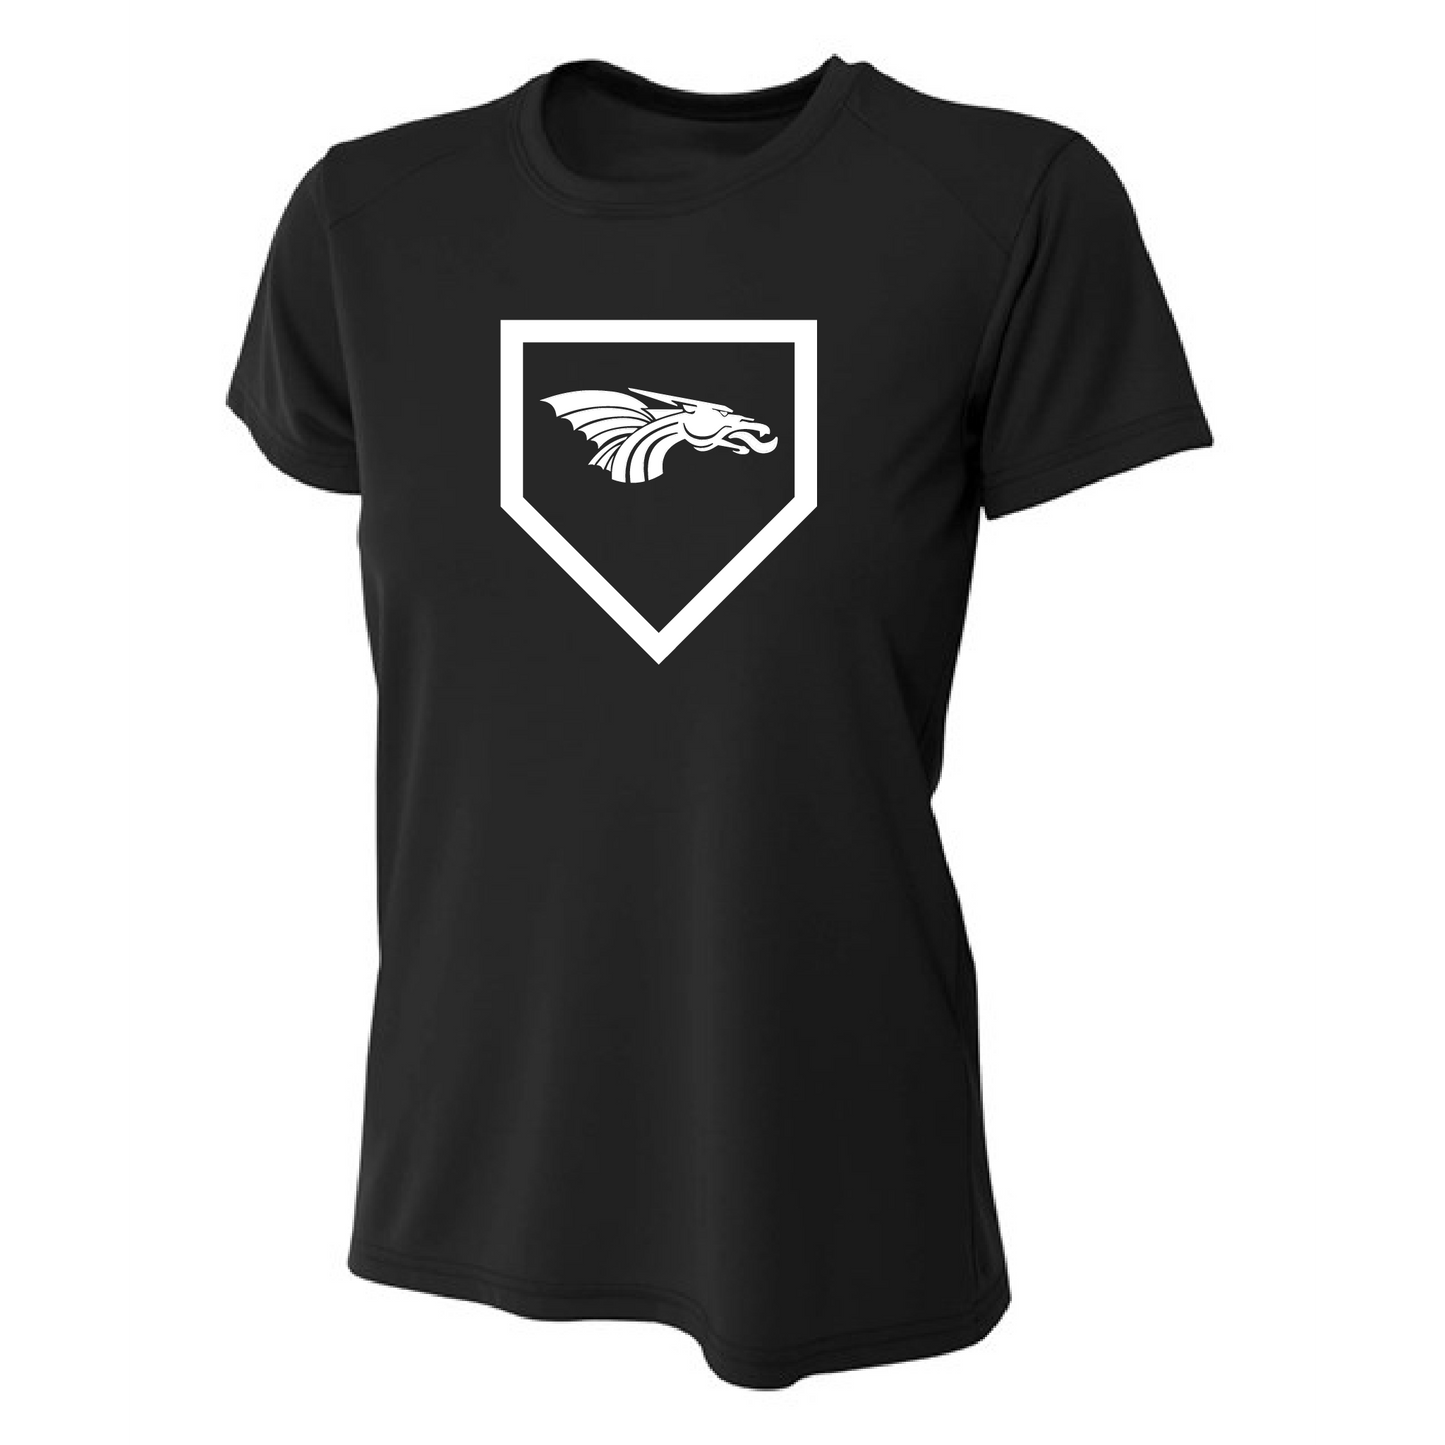 Womens S/S T-Shirt - Dragons Baseball Home Plate